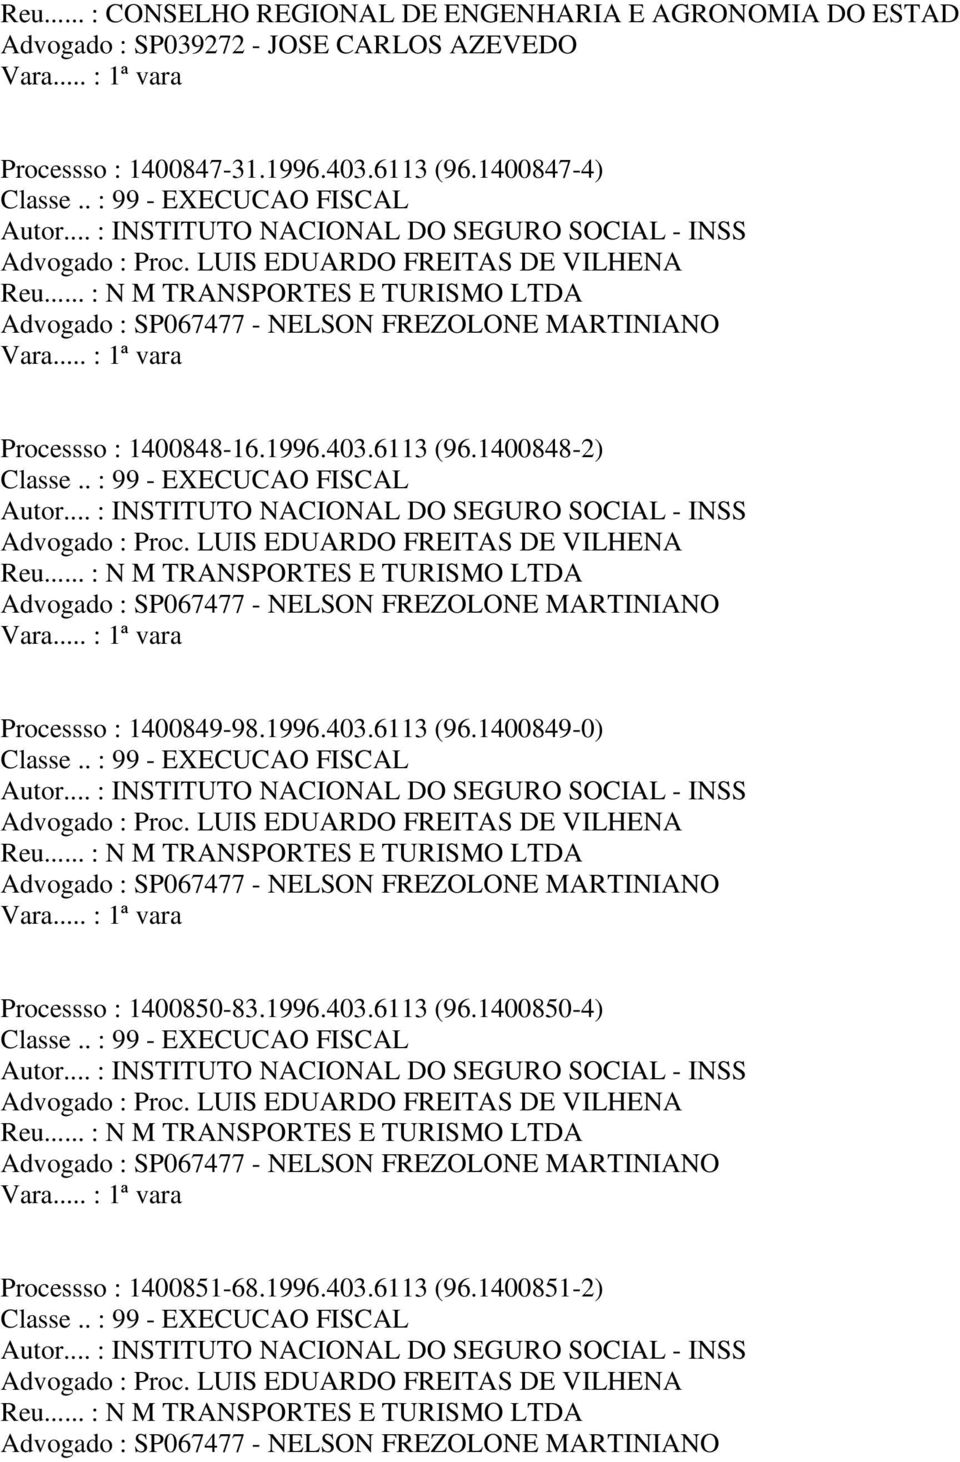 .. : N M TRANSPORTES E TURISMO LTDA Processso : 1400849-98.1996.403.6113 (96.1400849-0) Reu.